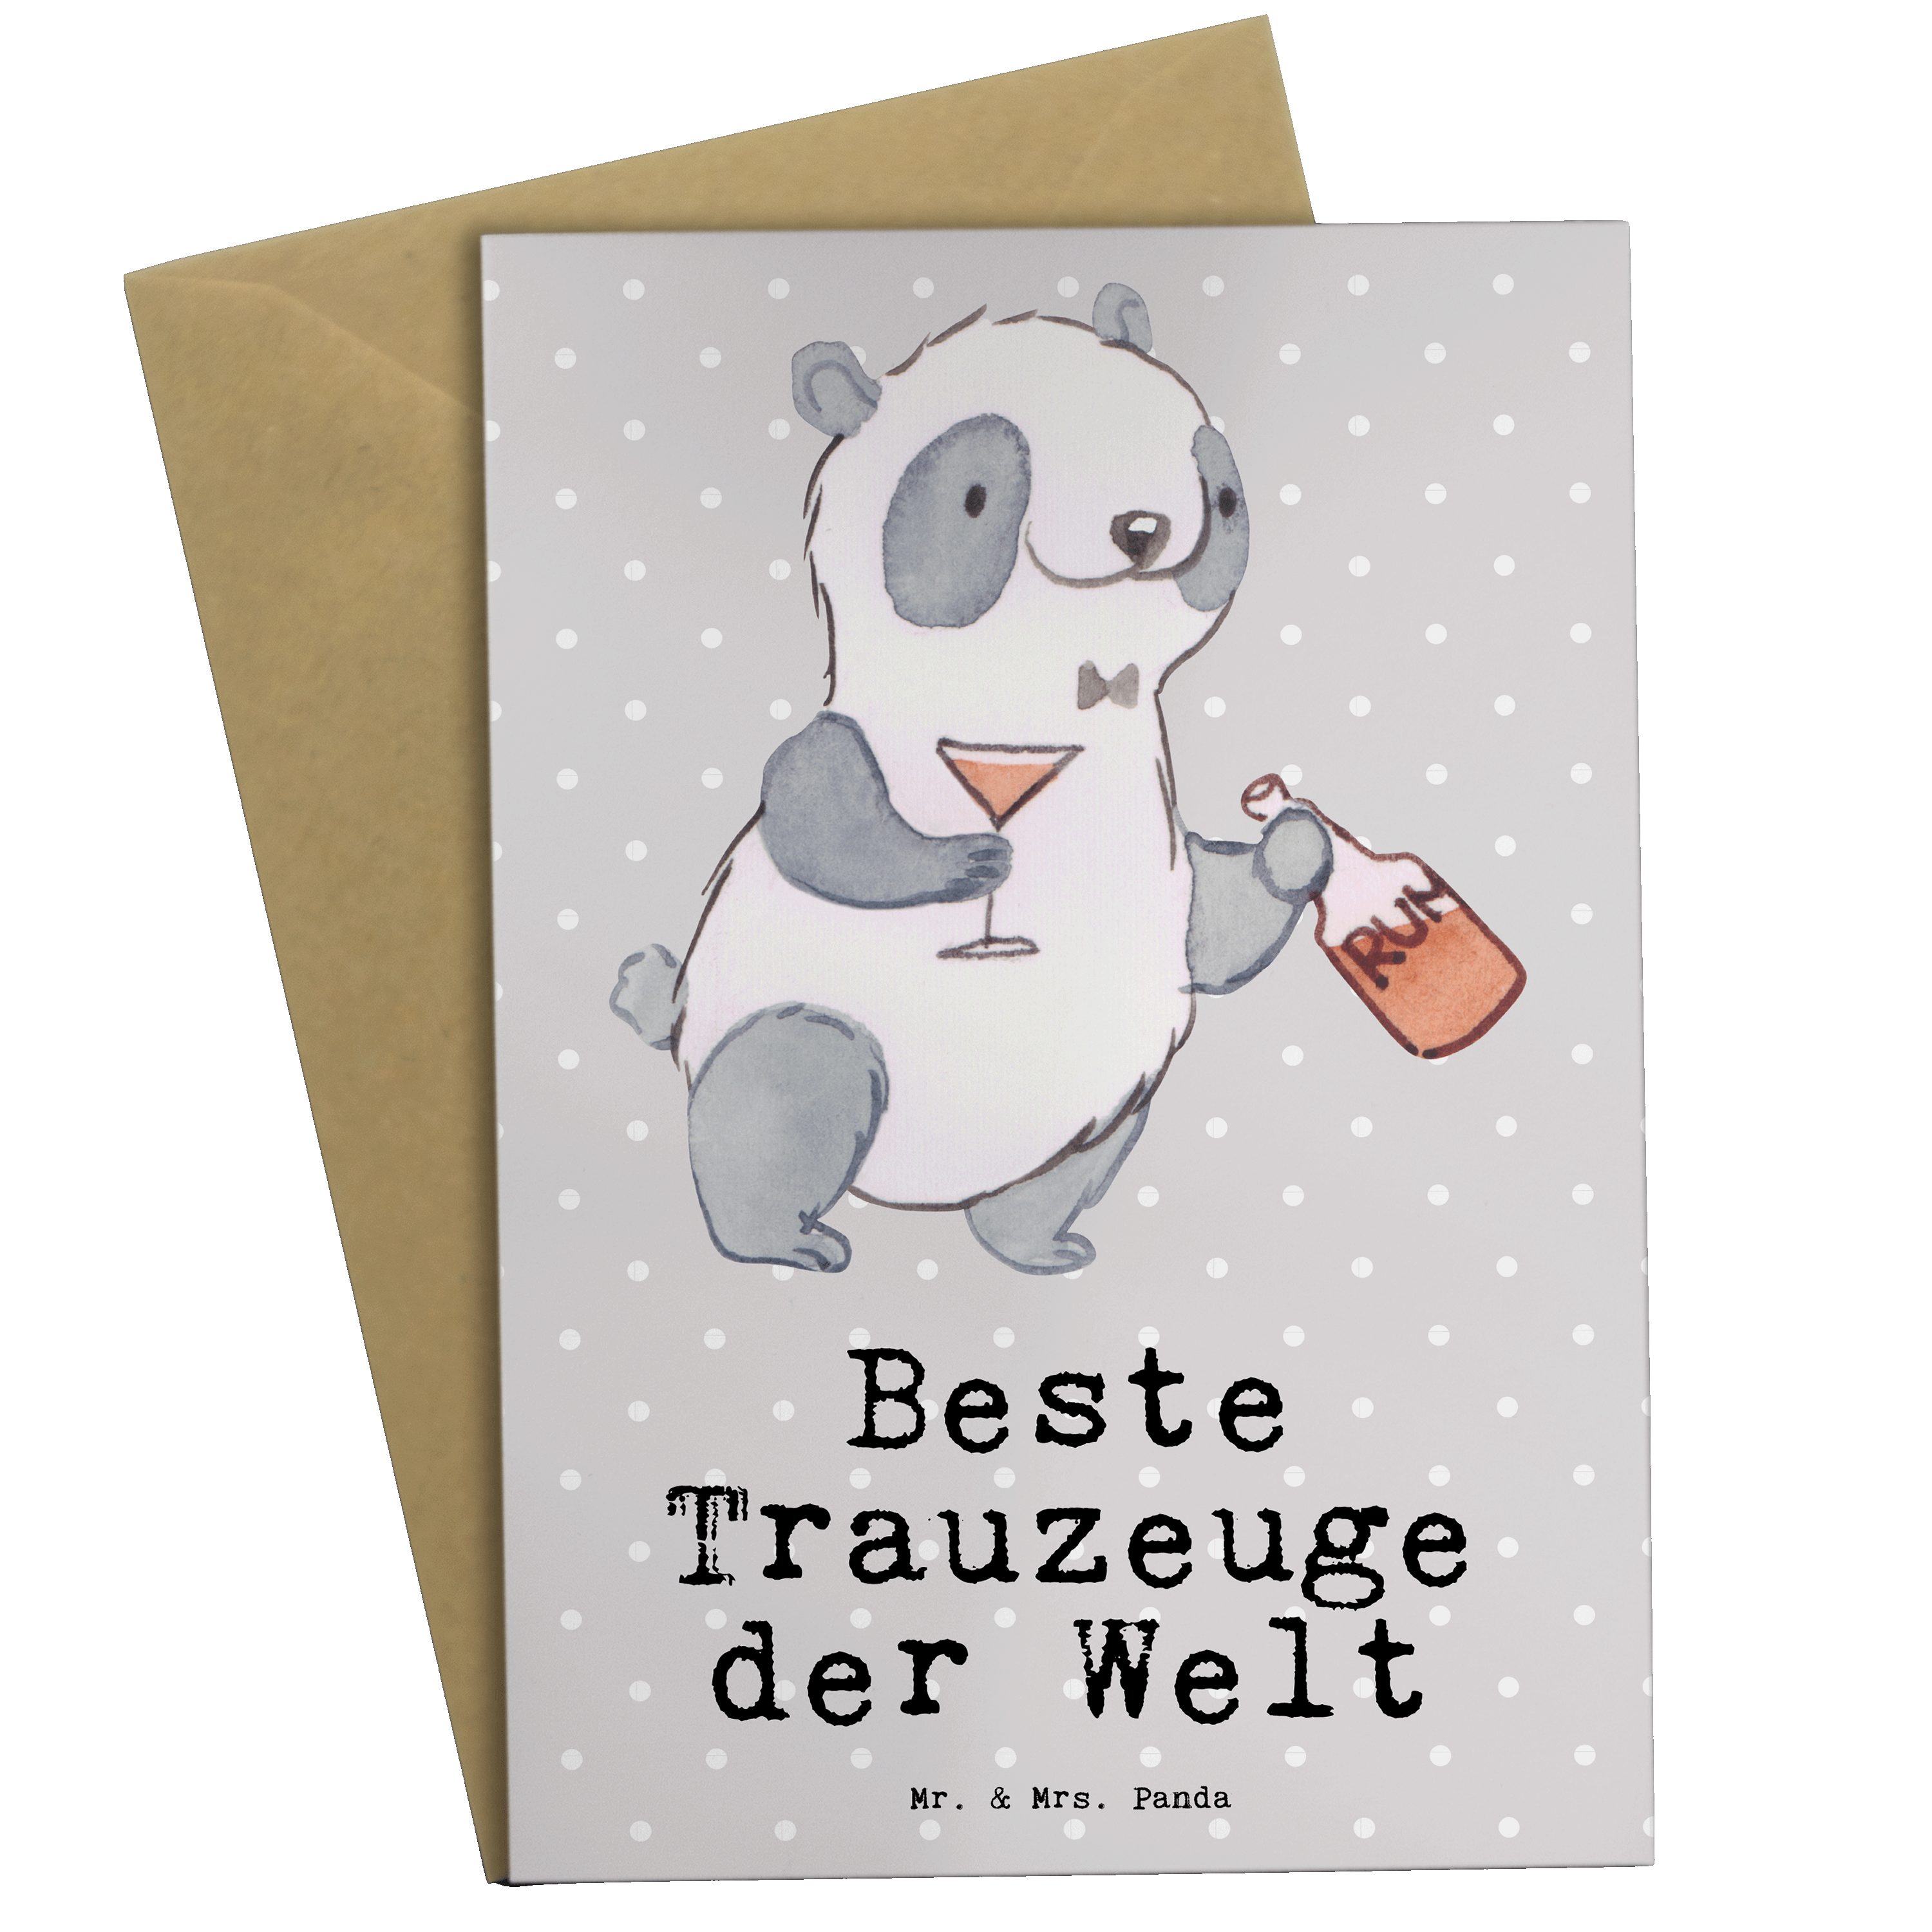 Mr. & Mrs. Panda Grußkarte Panda Bester Trauzeuge der Welt - Grau Pastell - Geschenk, Geschenkti